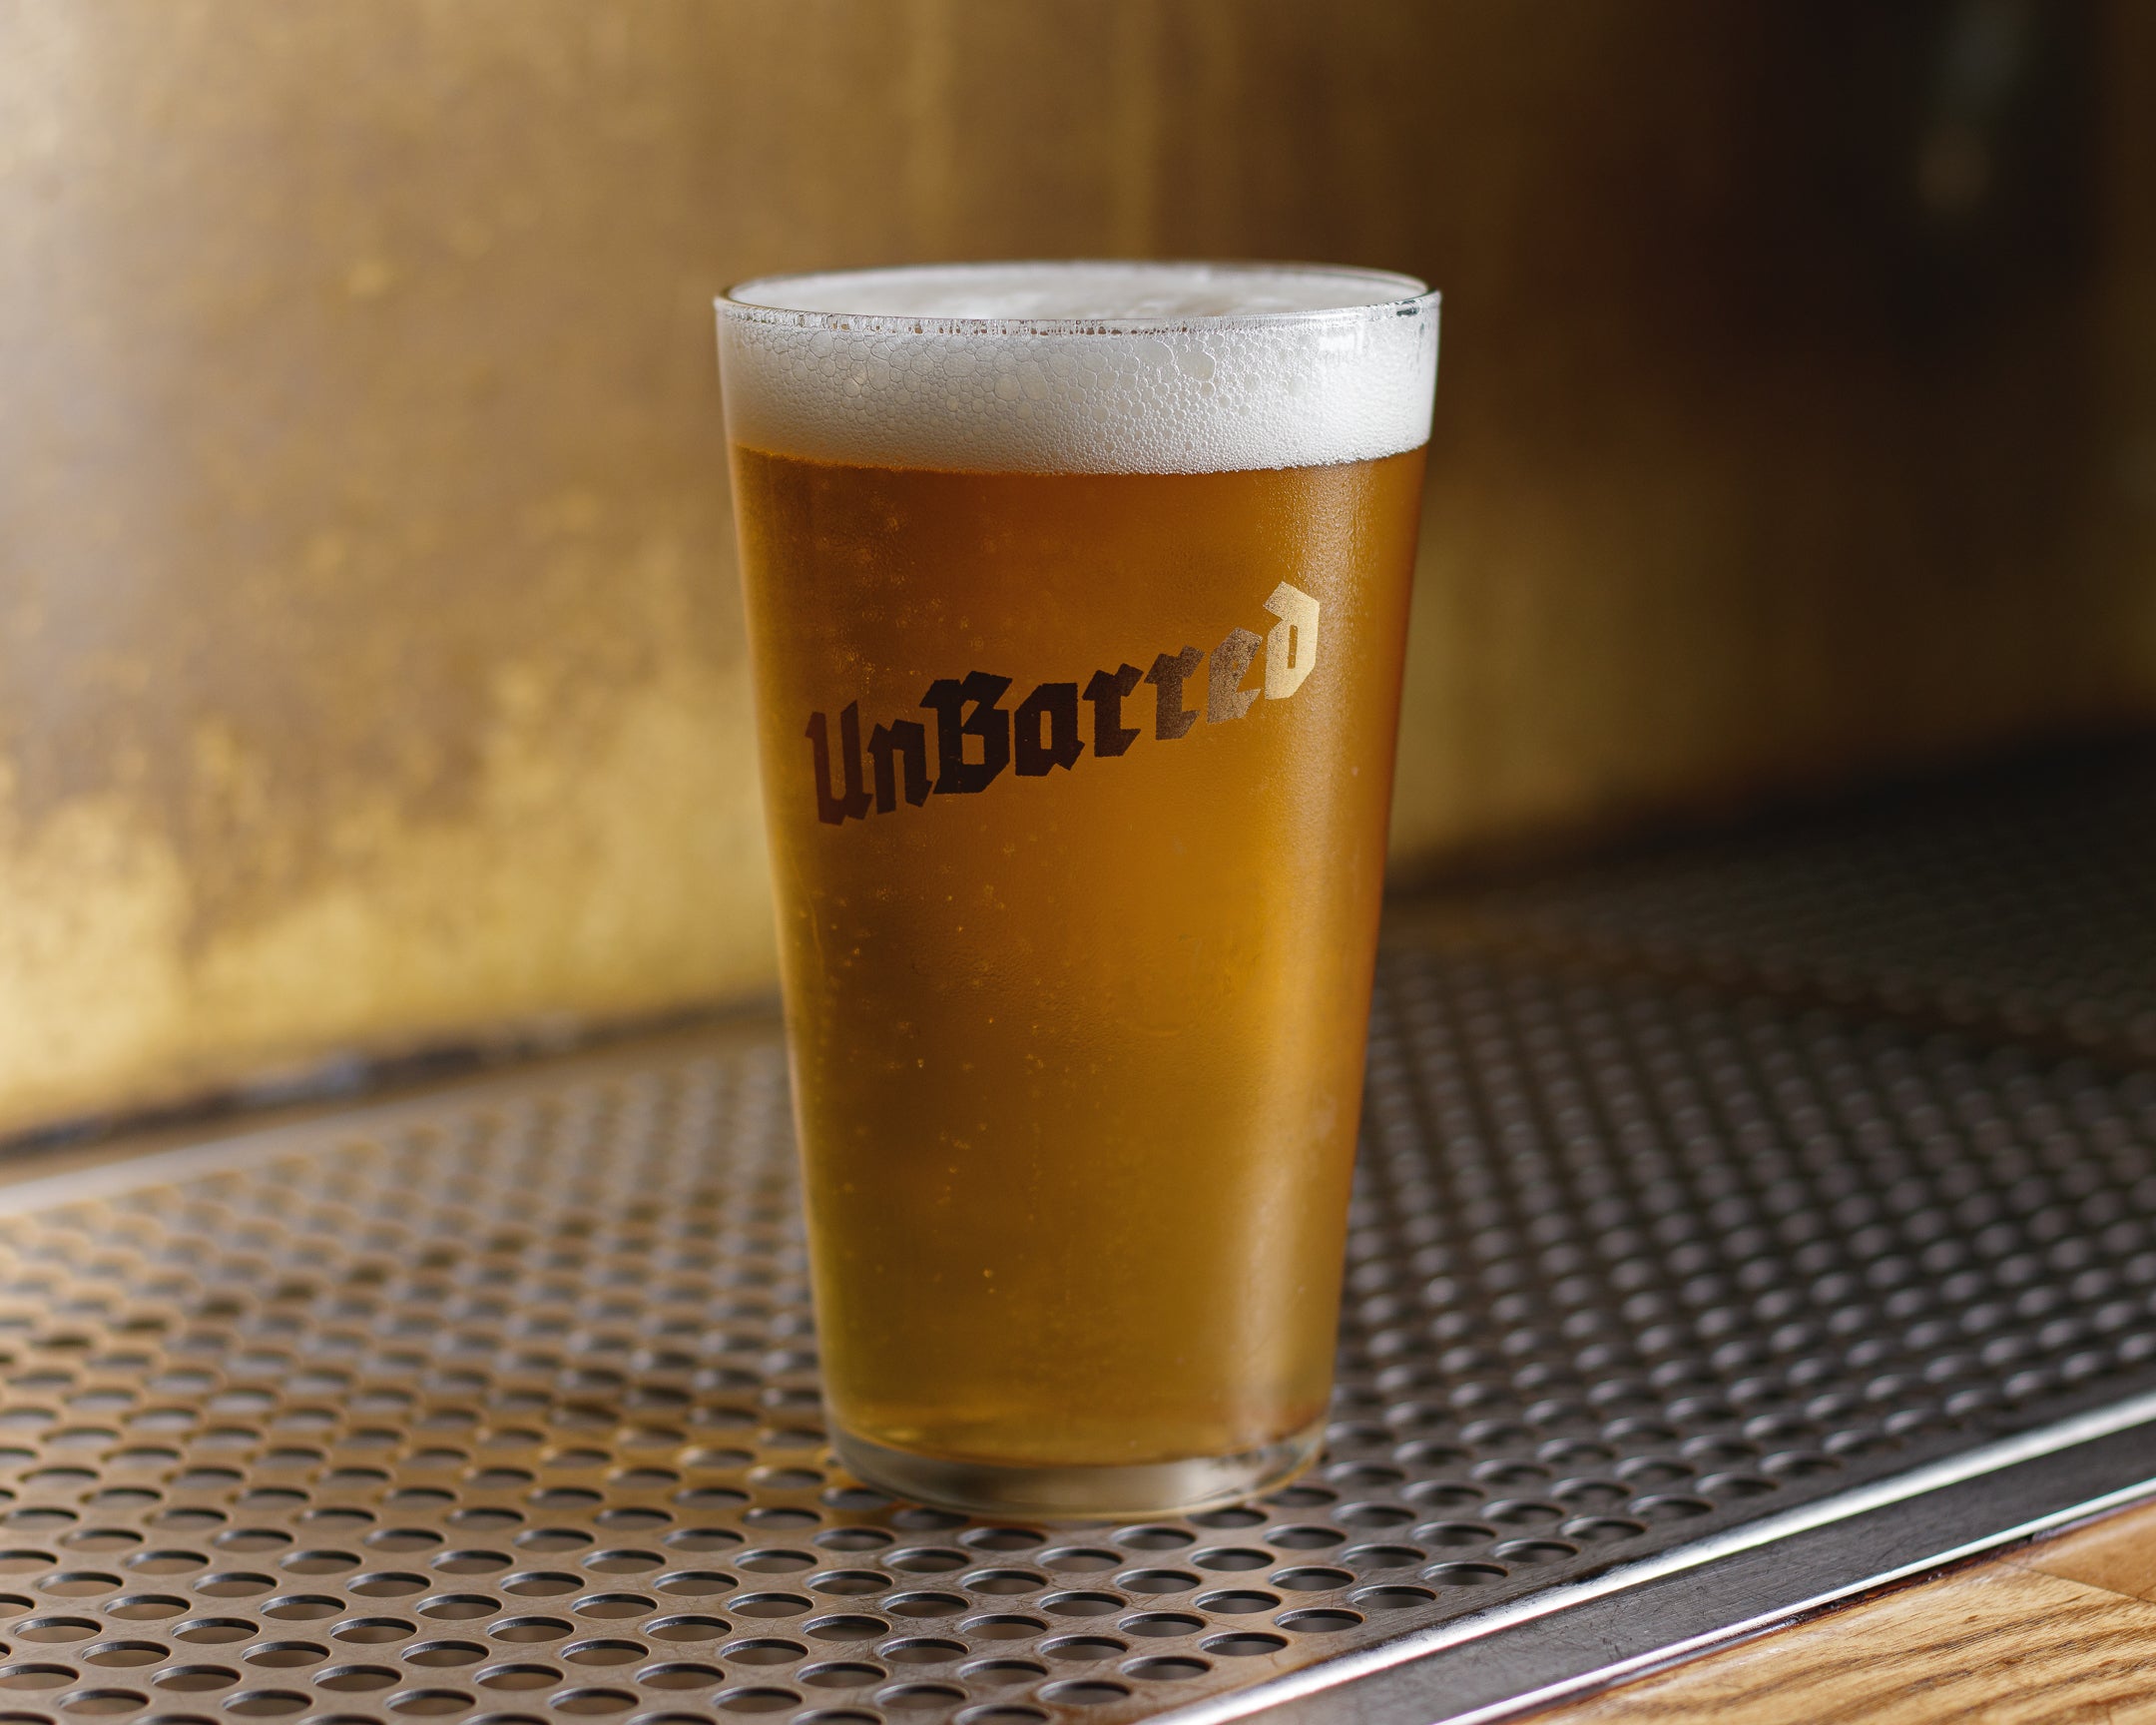 The Unbarred Brewery Tasting